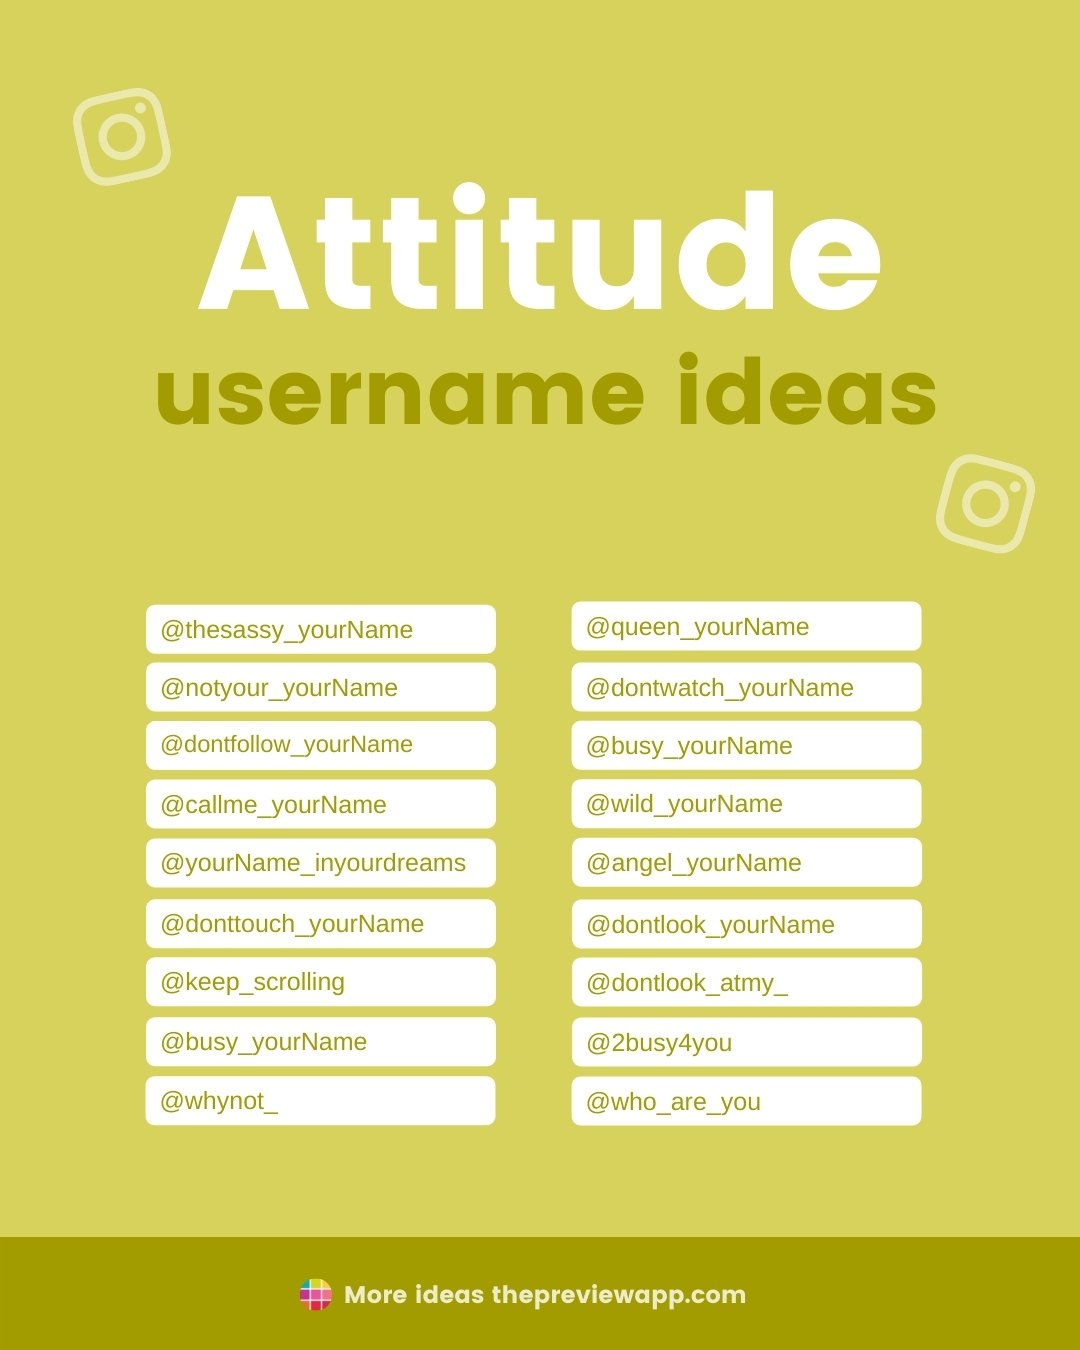 Instagram Username Ideas with Attitude